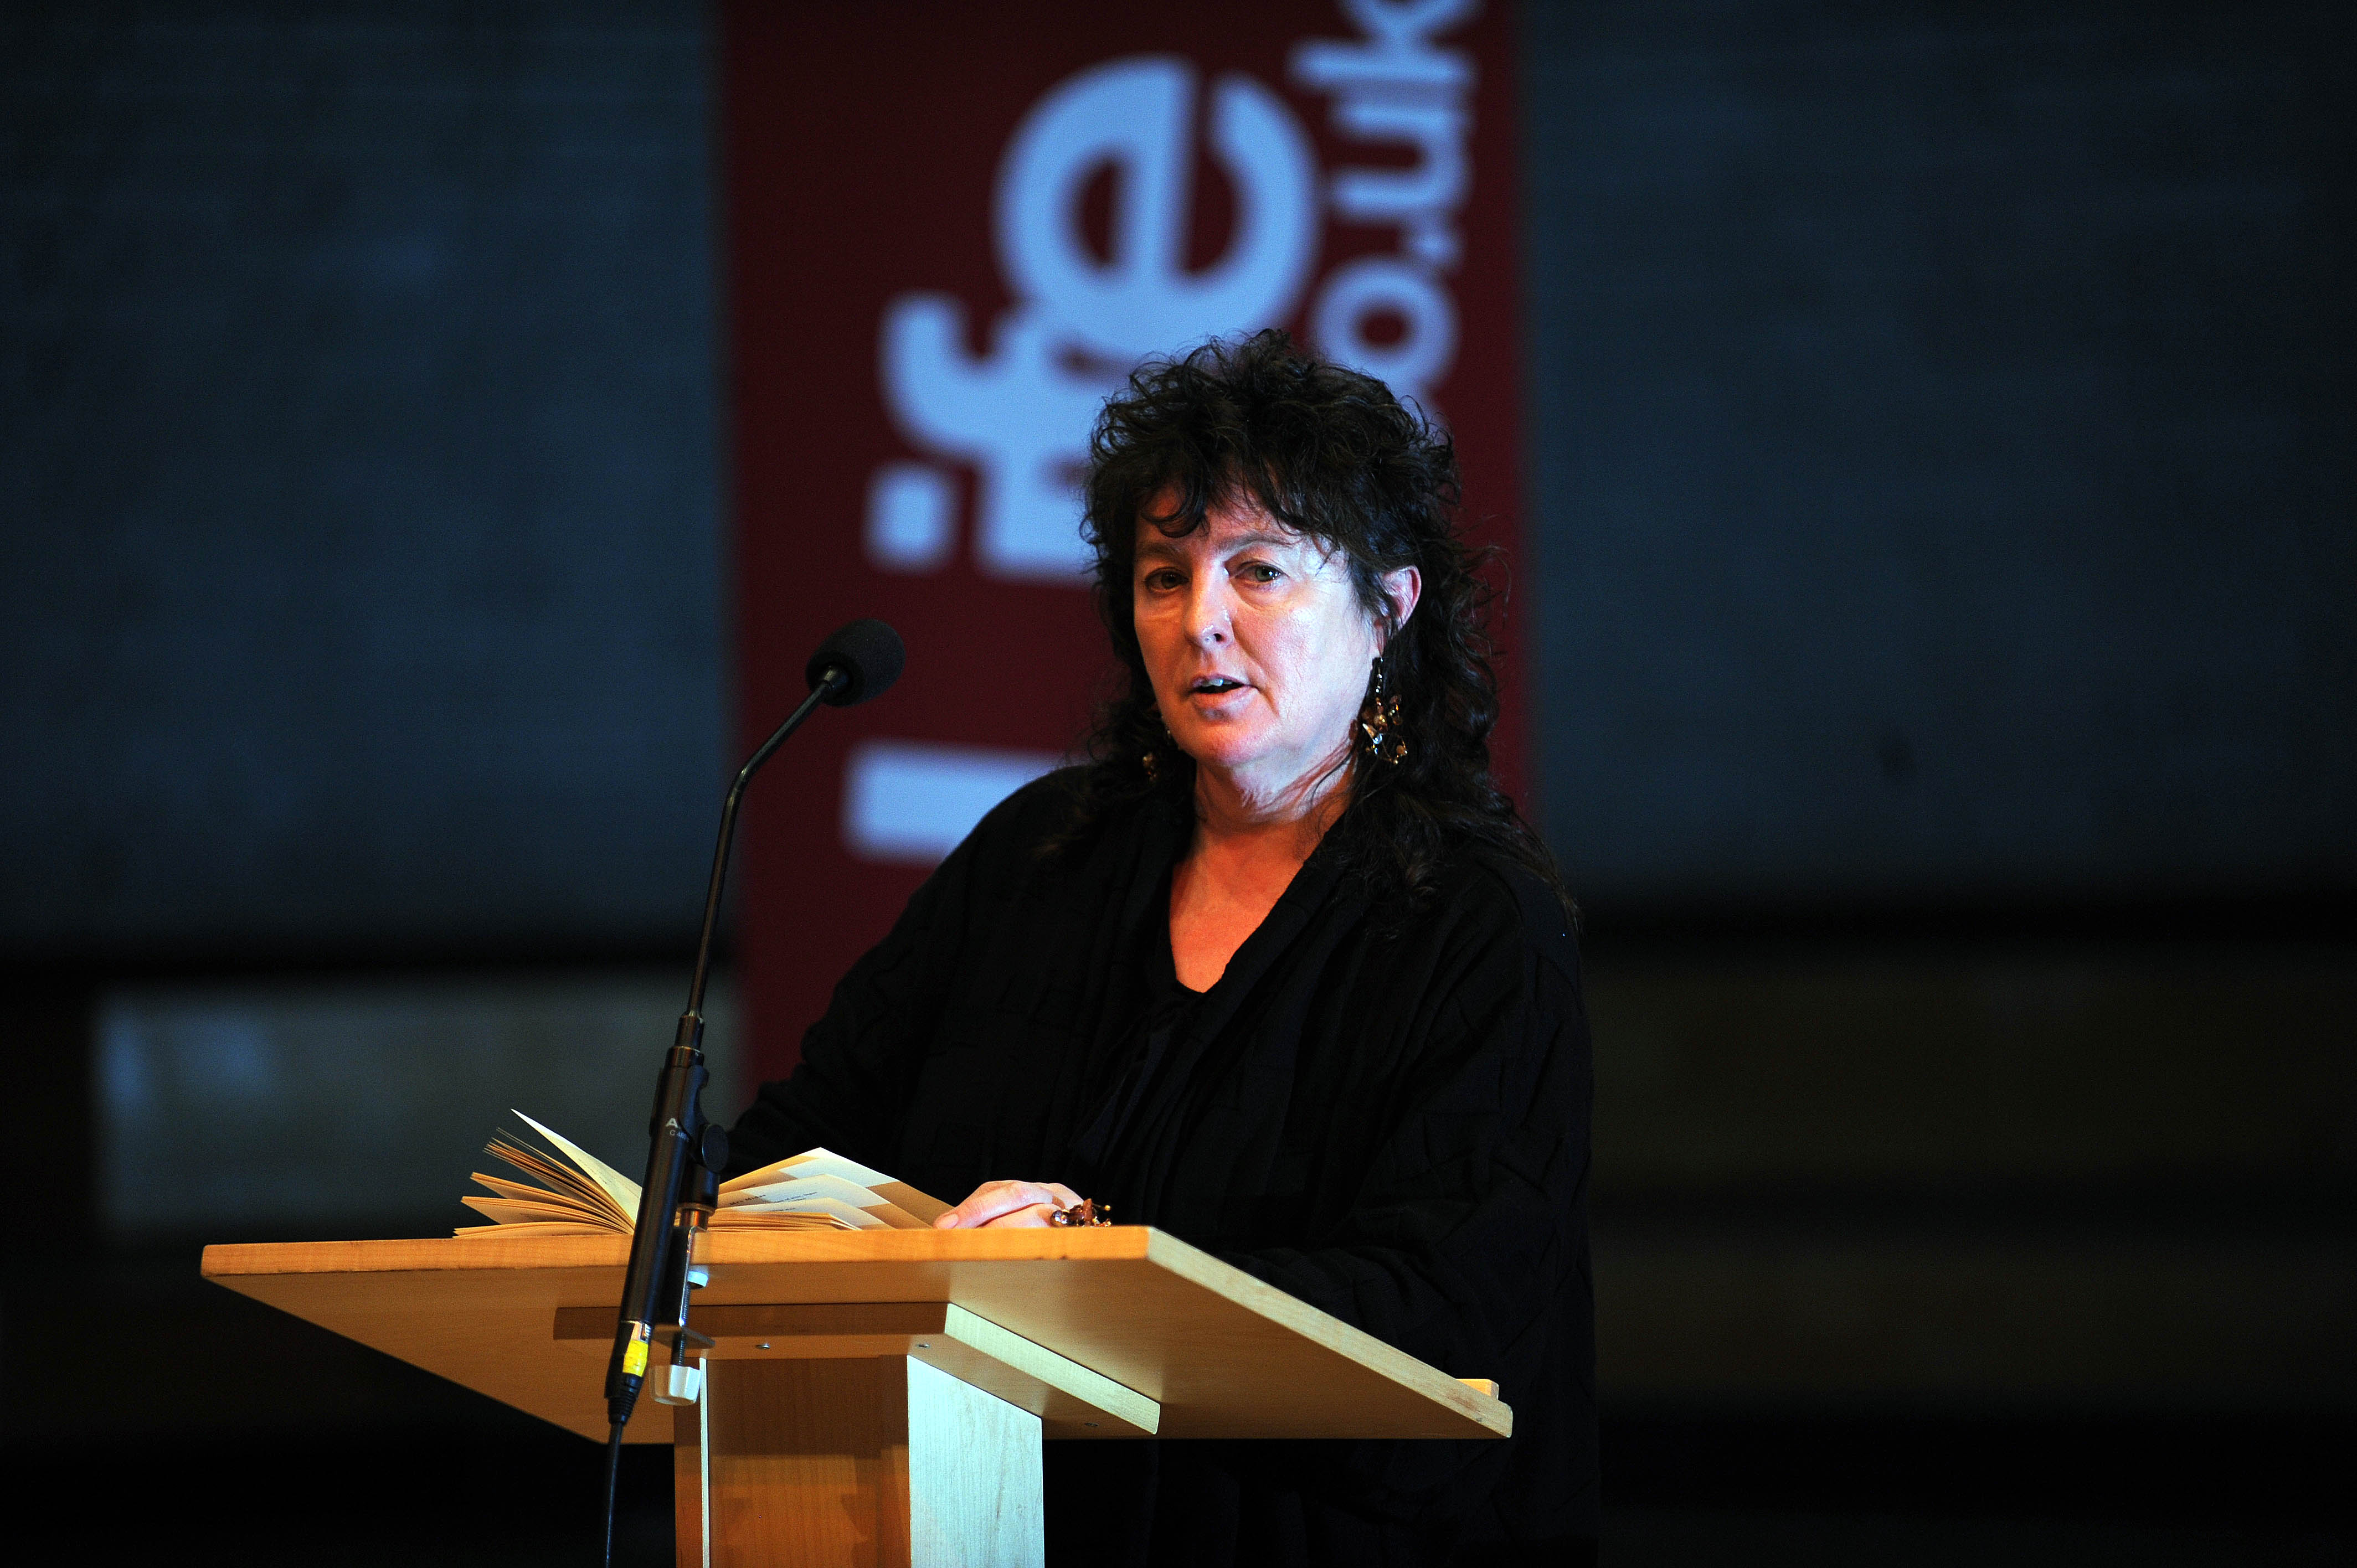 Poet Laureate Professor Dame Carol Ann Duffy